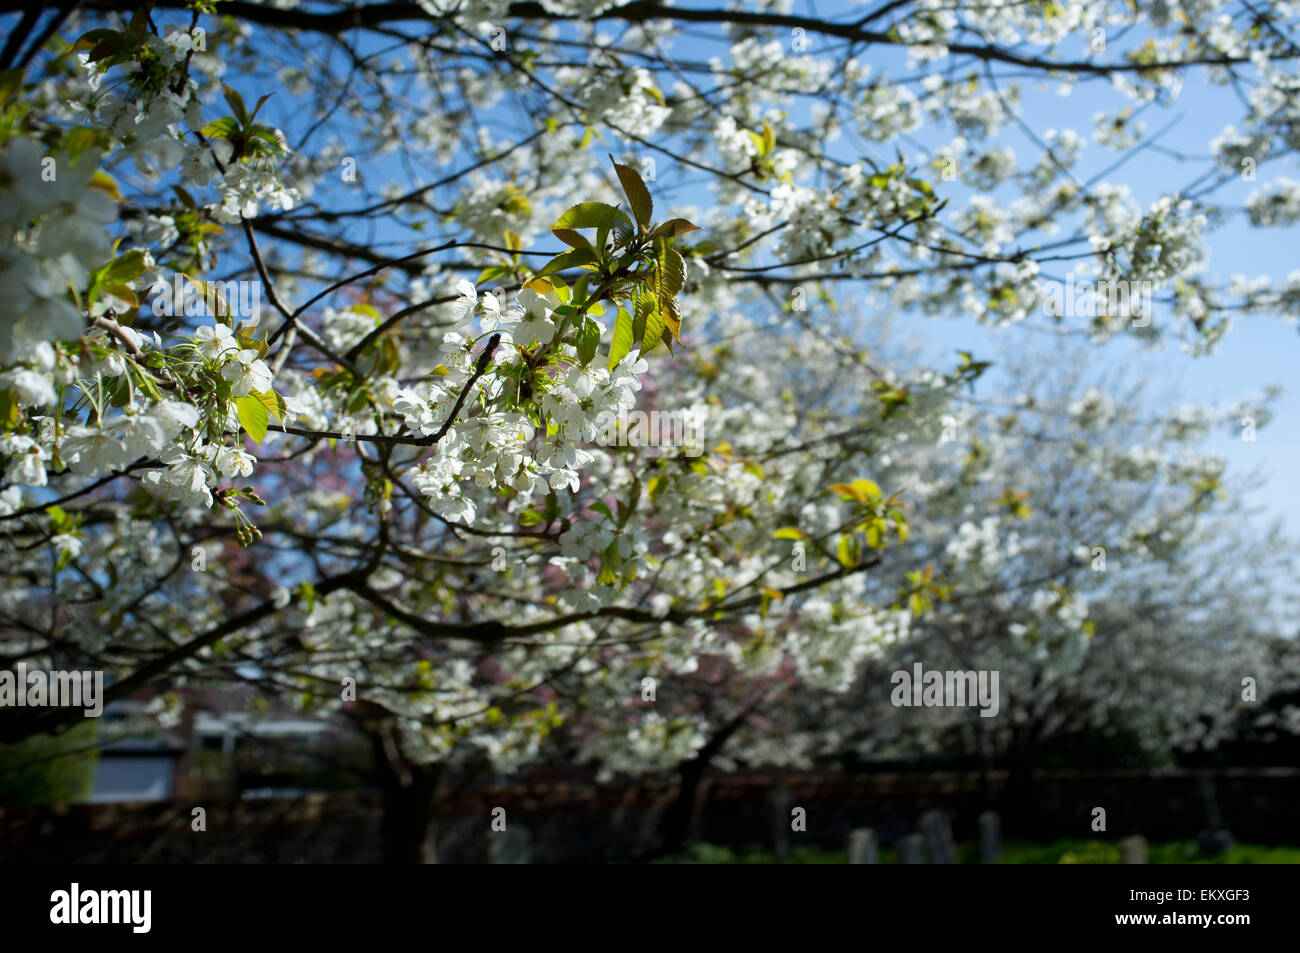 Tree blossom in spring season, Oxfordshire, UK. Stock Photo